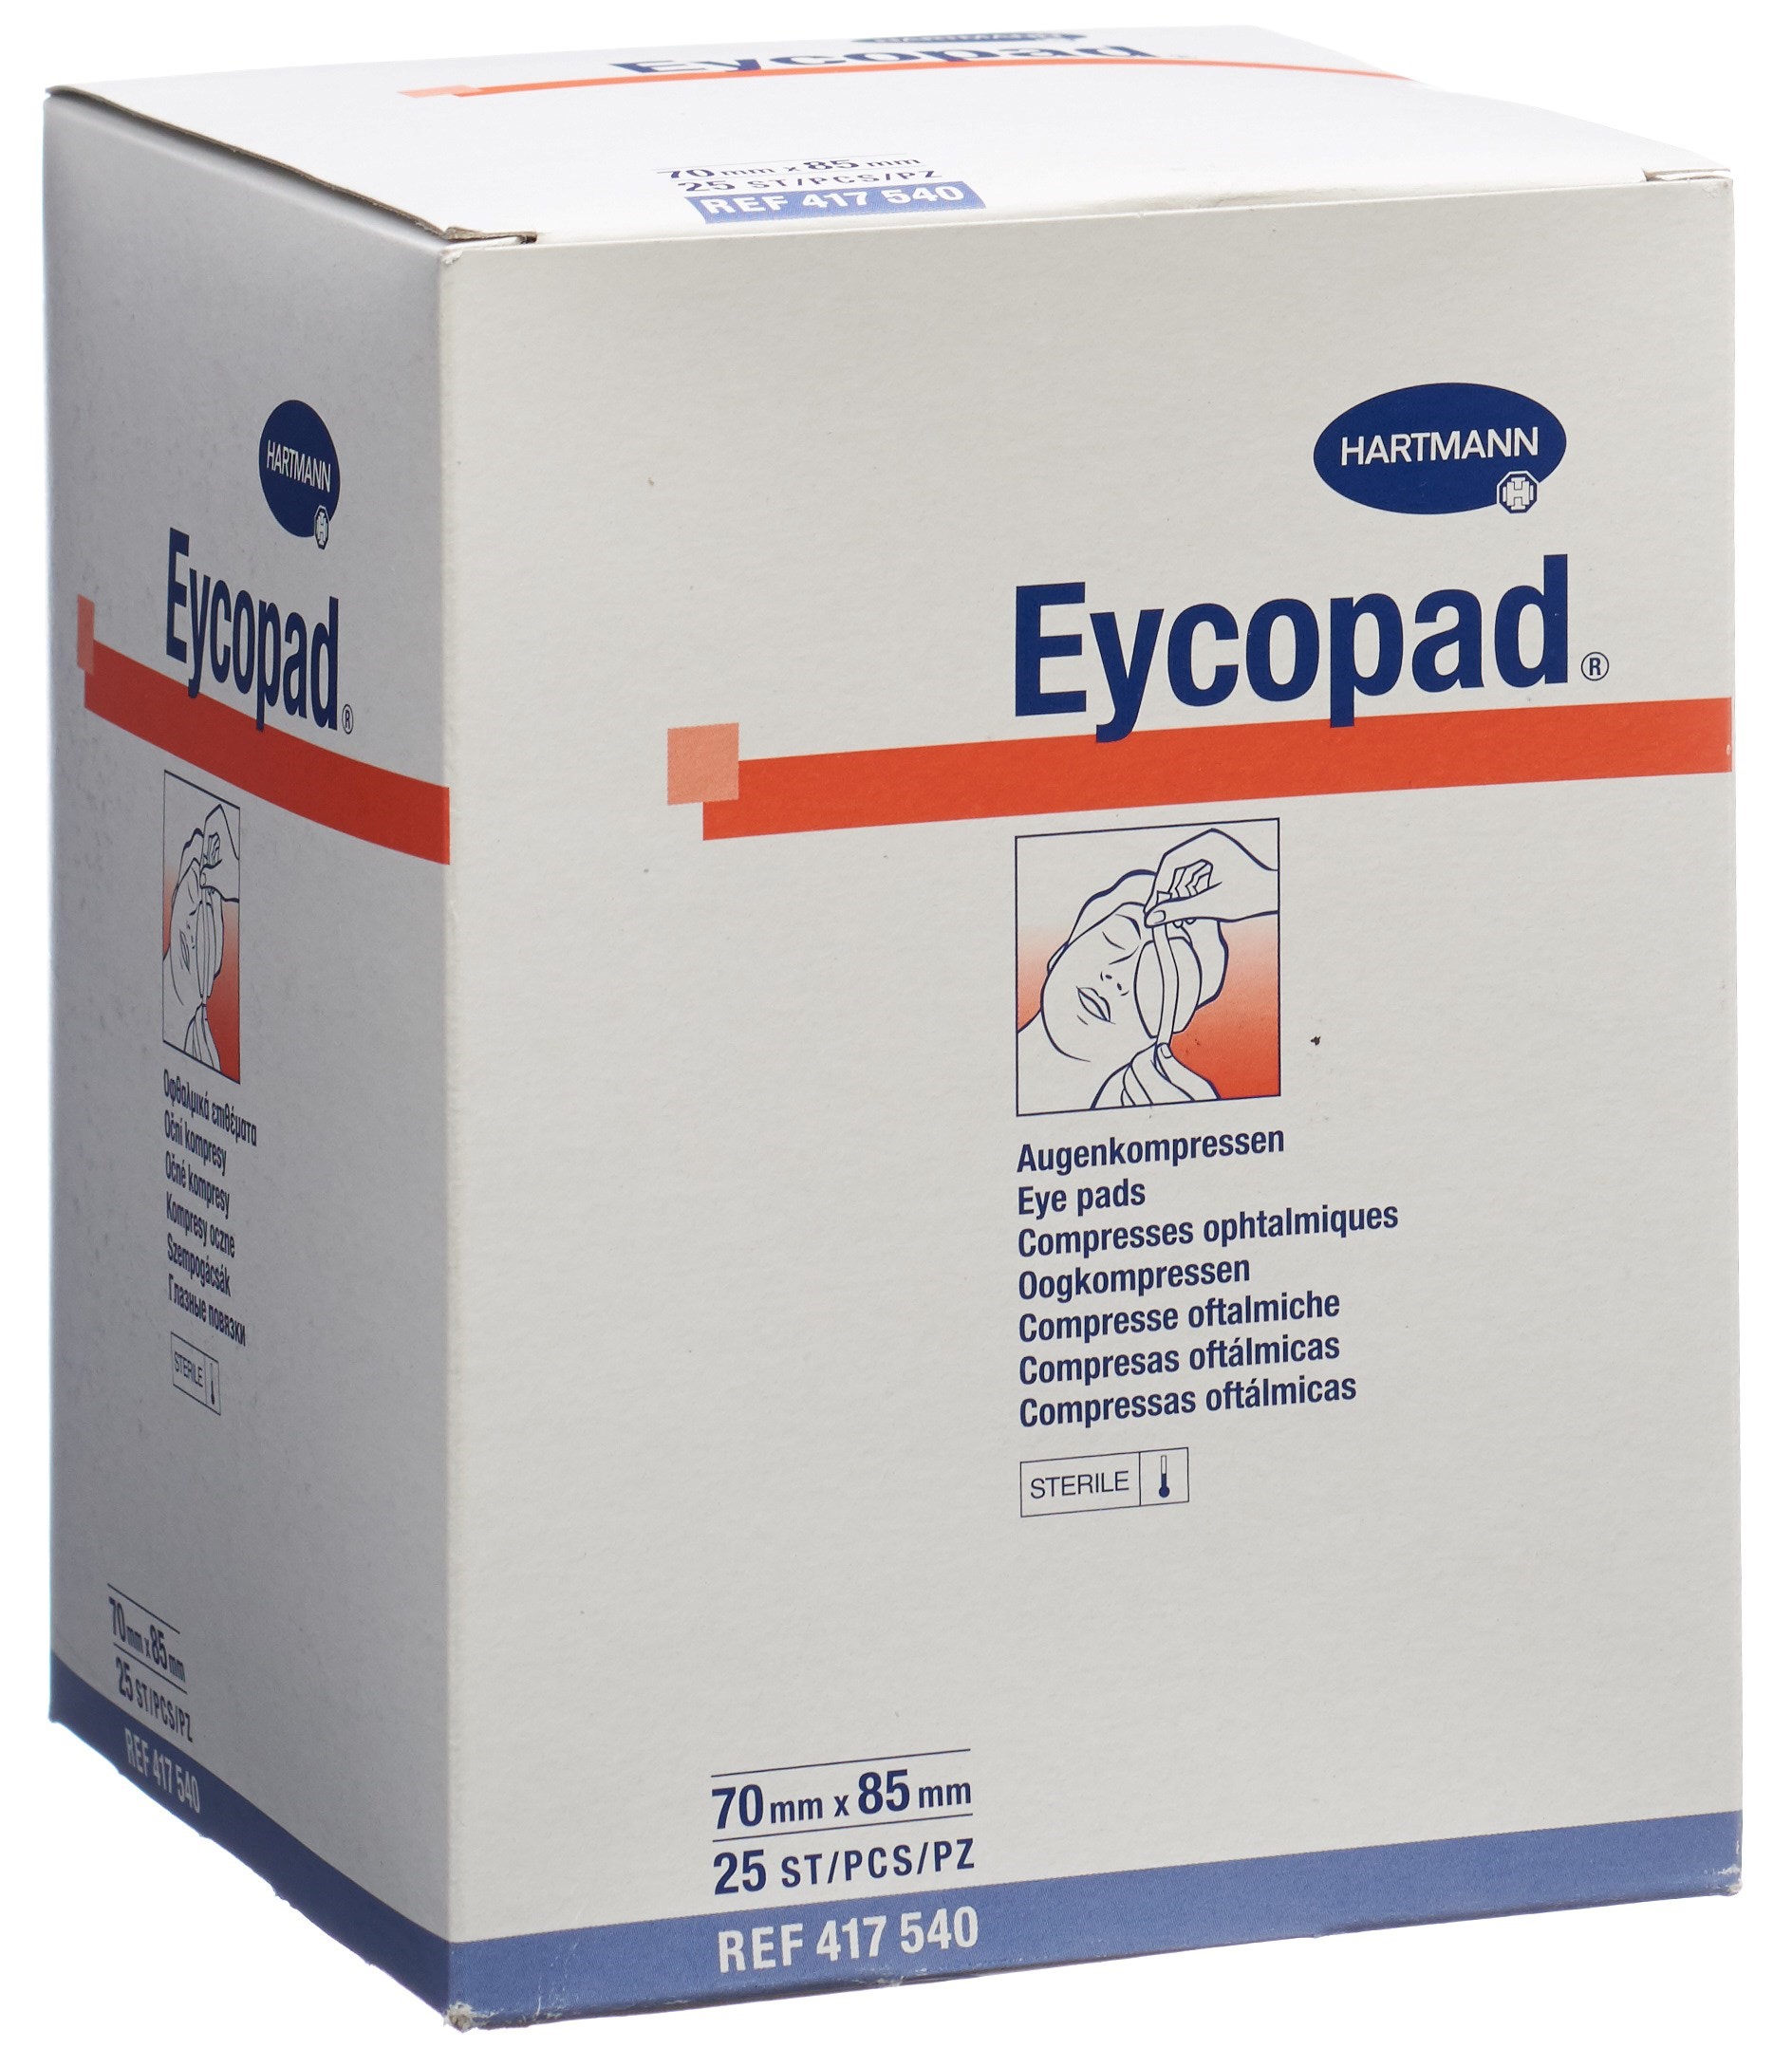 EYCOPAD Augenkompressen 70x85mm steril 25 Stk